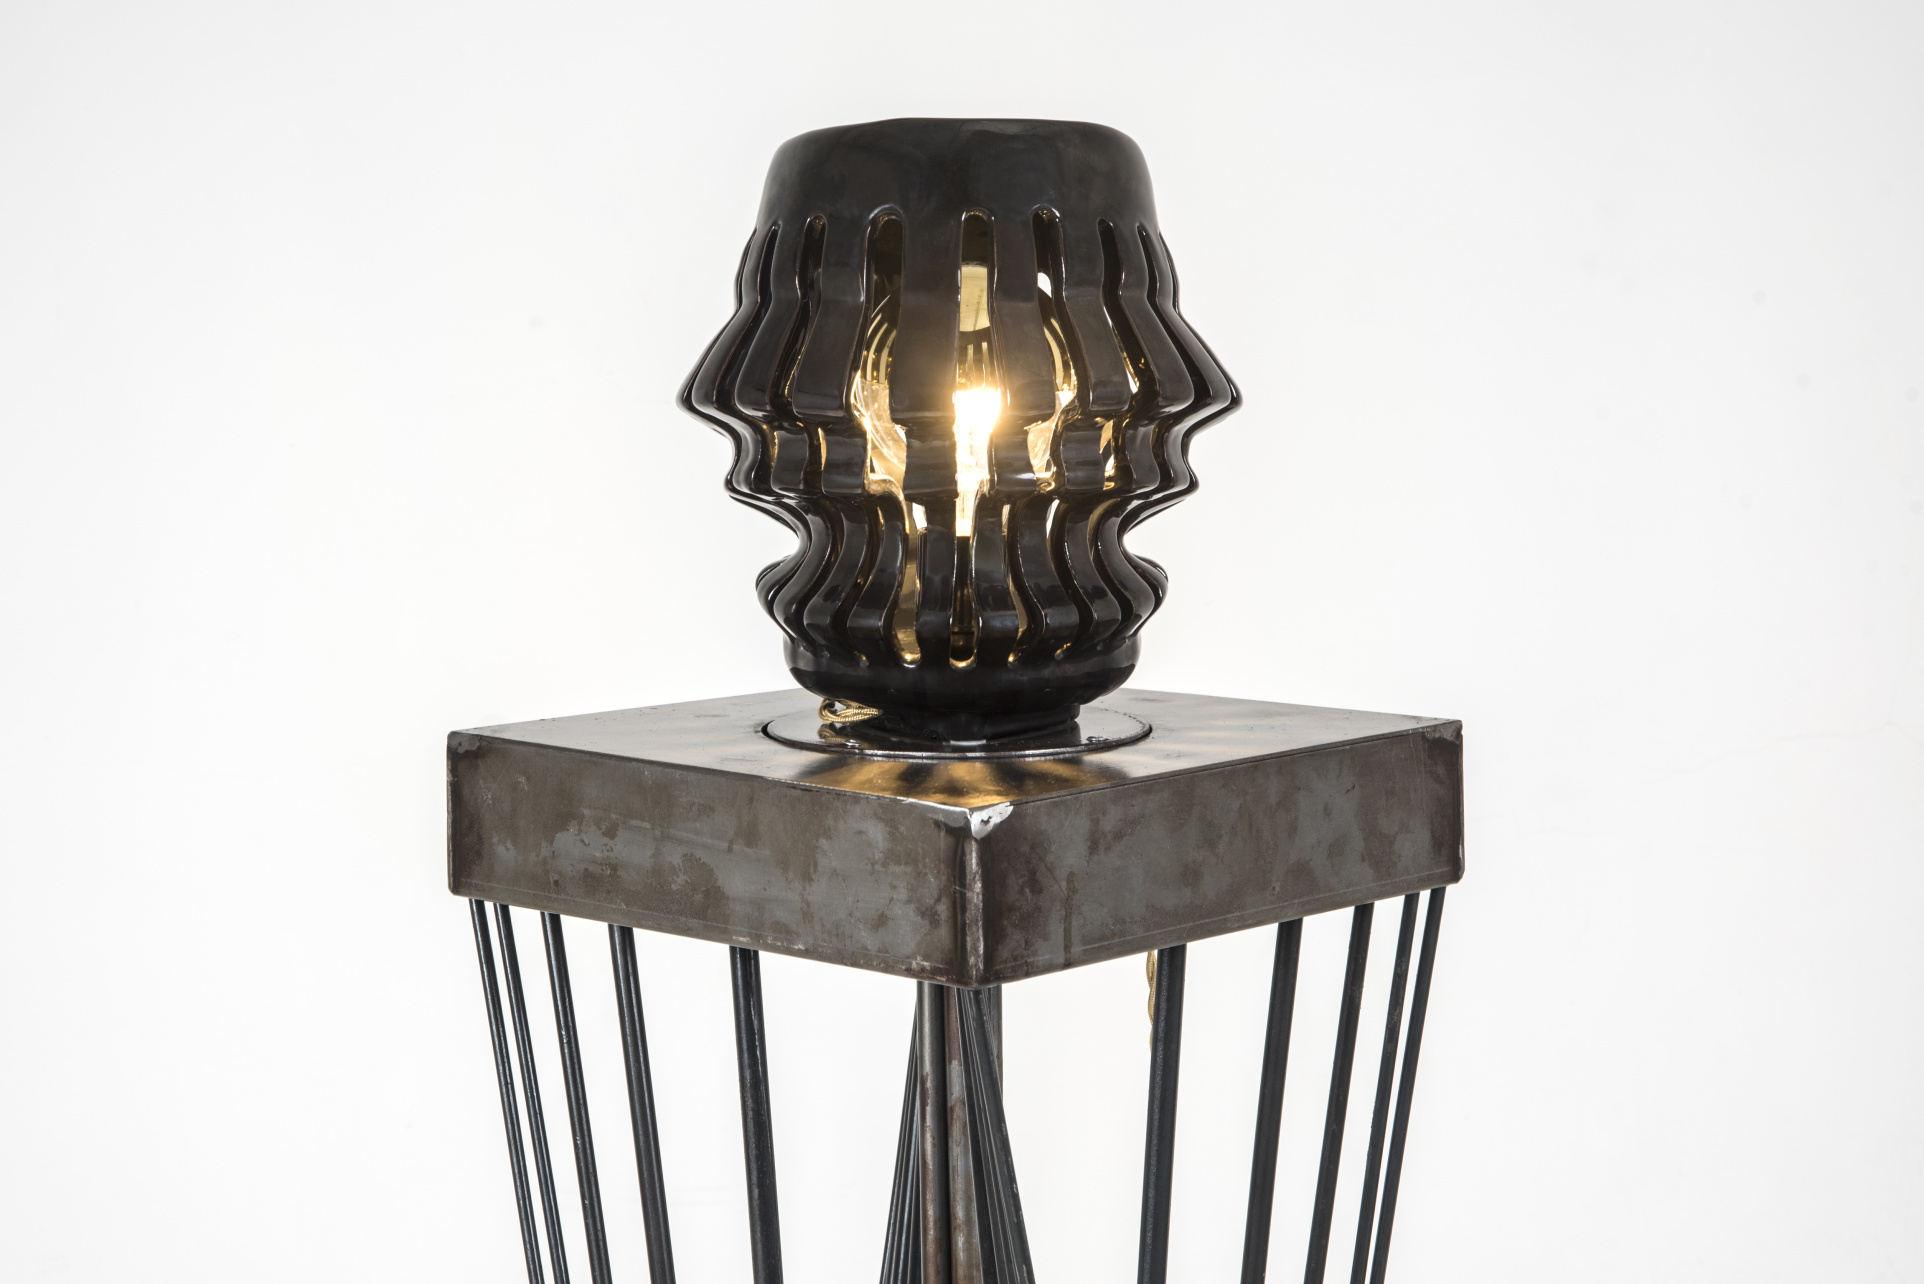 kurvo - fLuxus - 1 - Slip Casting - Metallic Black Glaze Ceramic Lamp - 2016 - £1150 - High Res